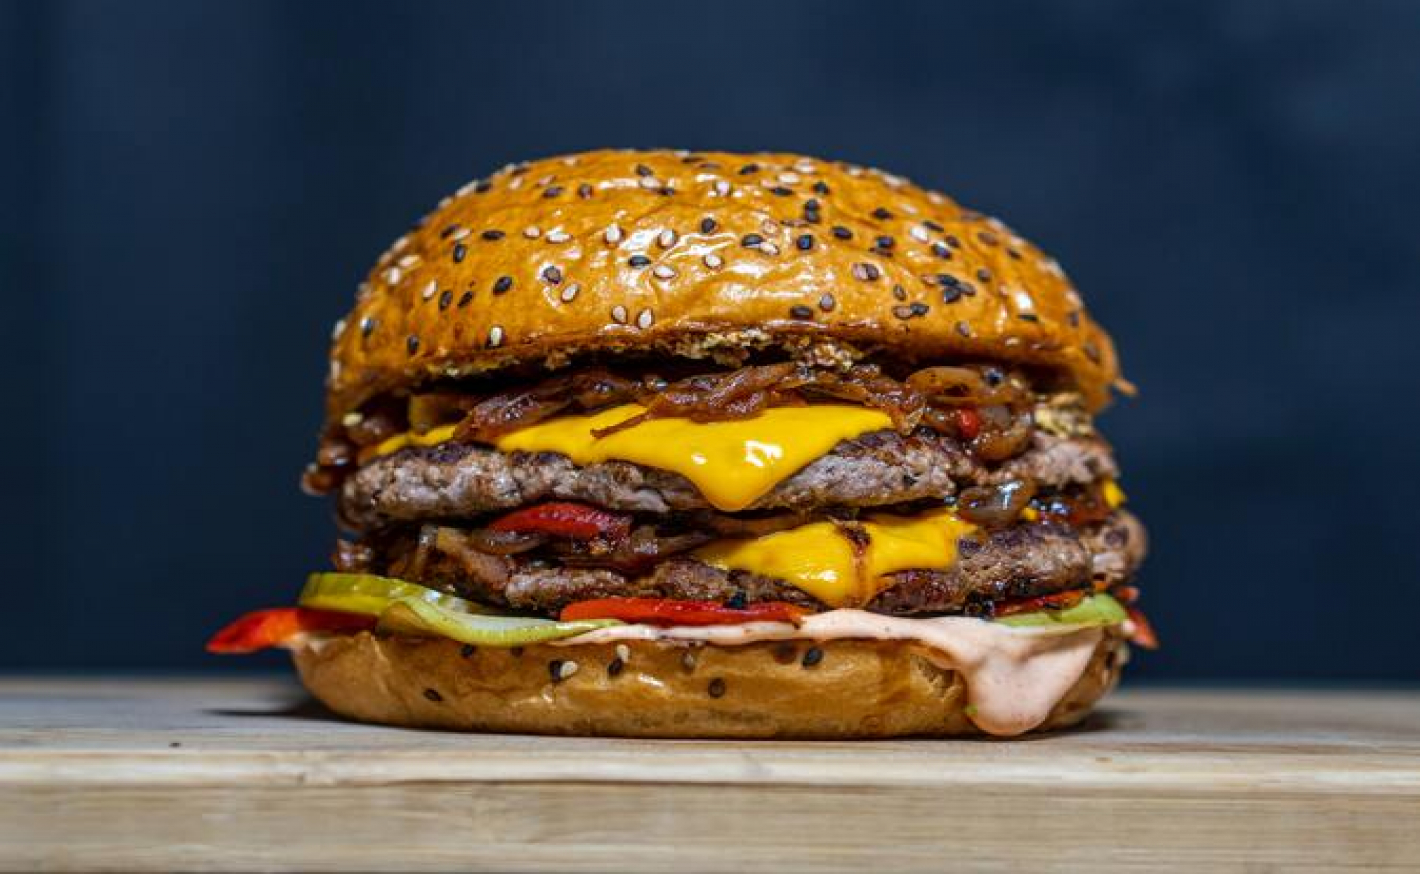 Frases para propaganda de hambúrguer: 22 ideias incríveis